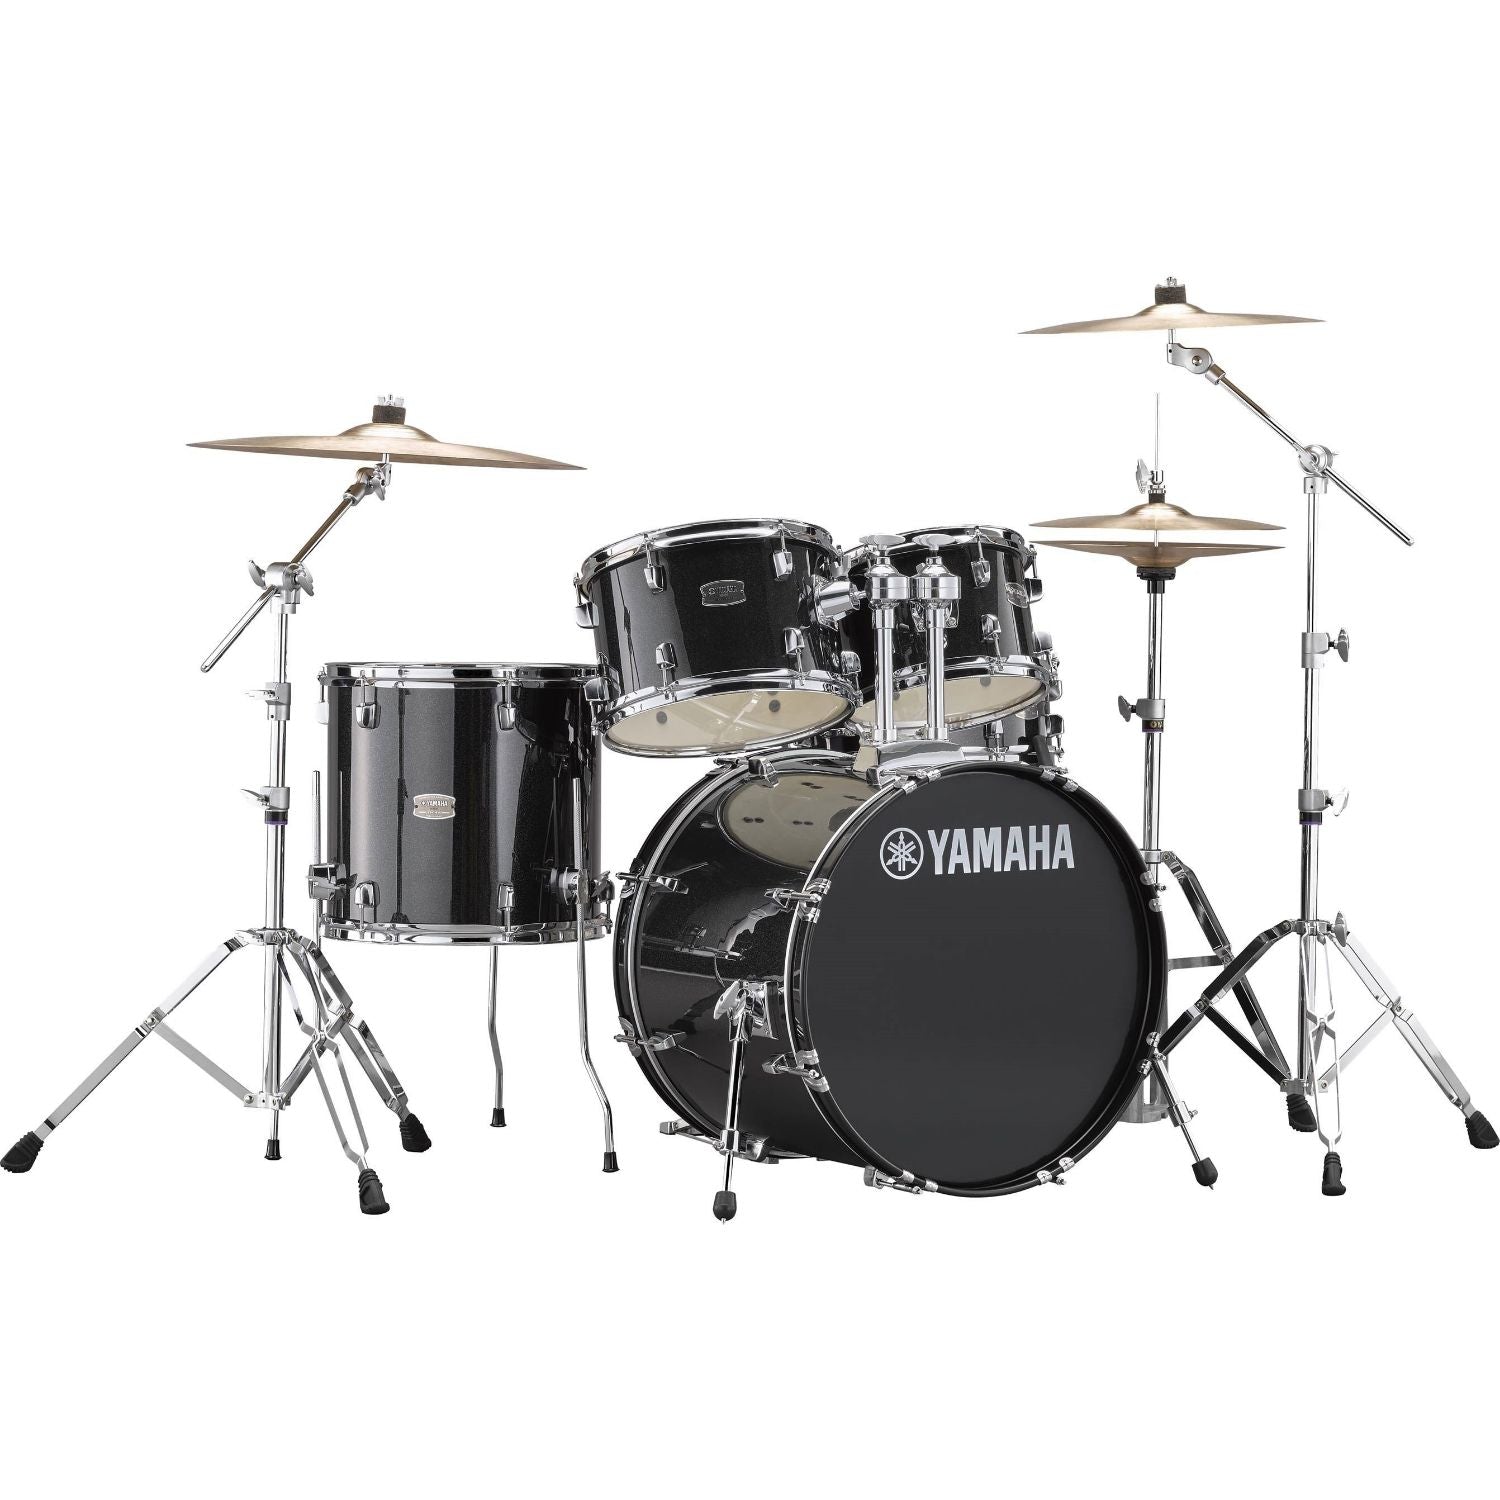 Yamaha RDP0F5BLG Rydeen Fusion Drum Kit, Black Glitter incl Free Yamaha Stool & Sticks